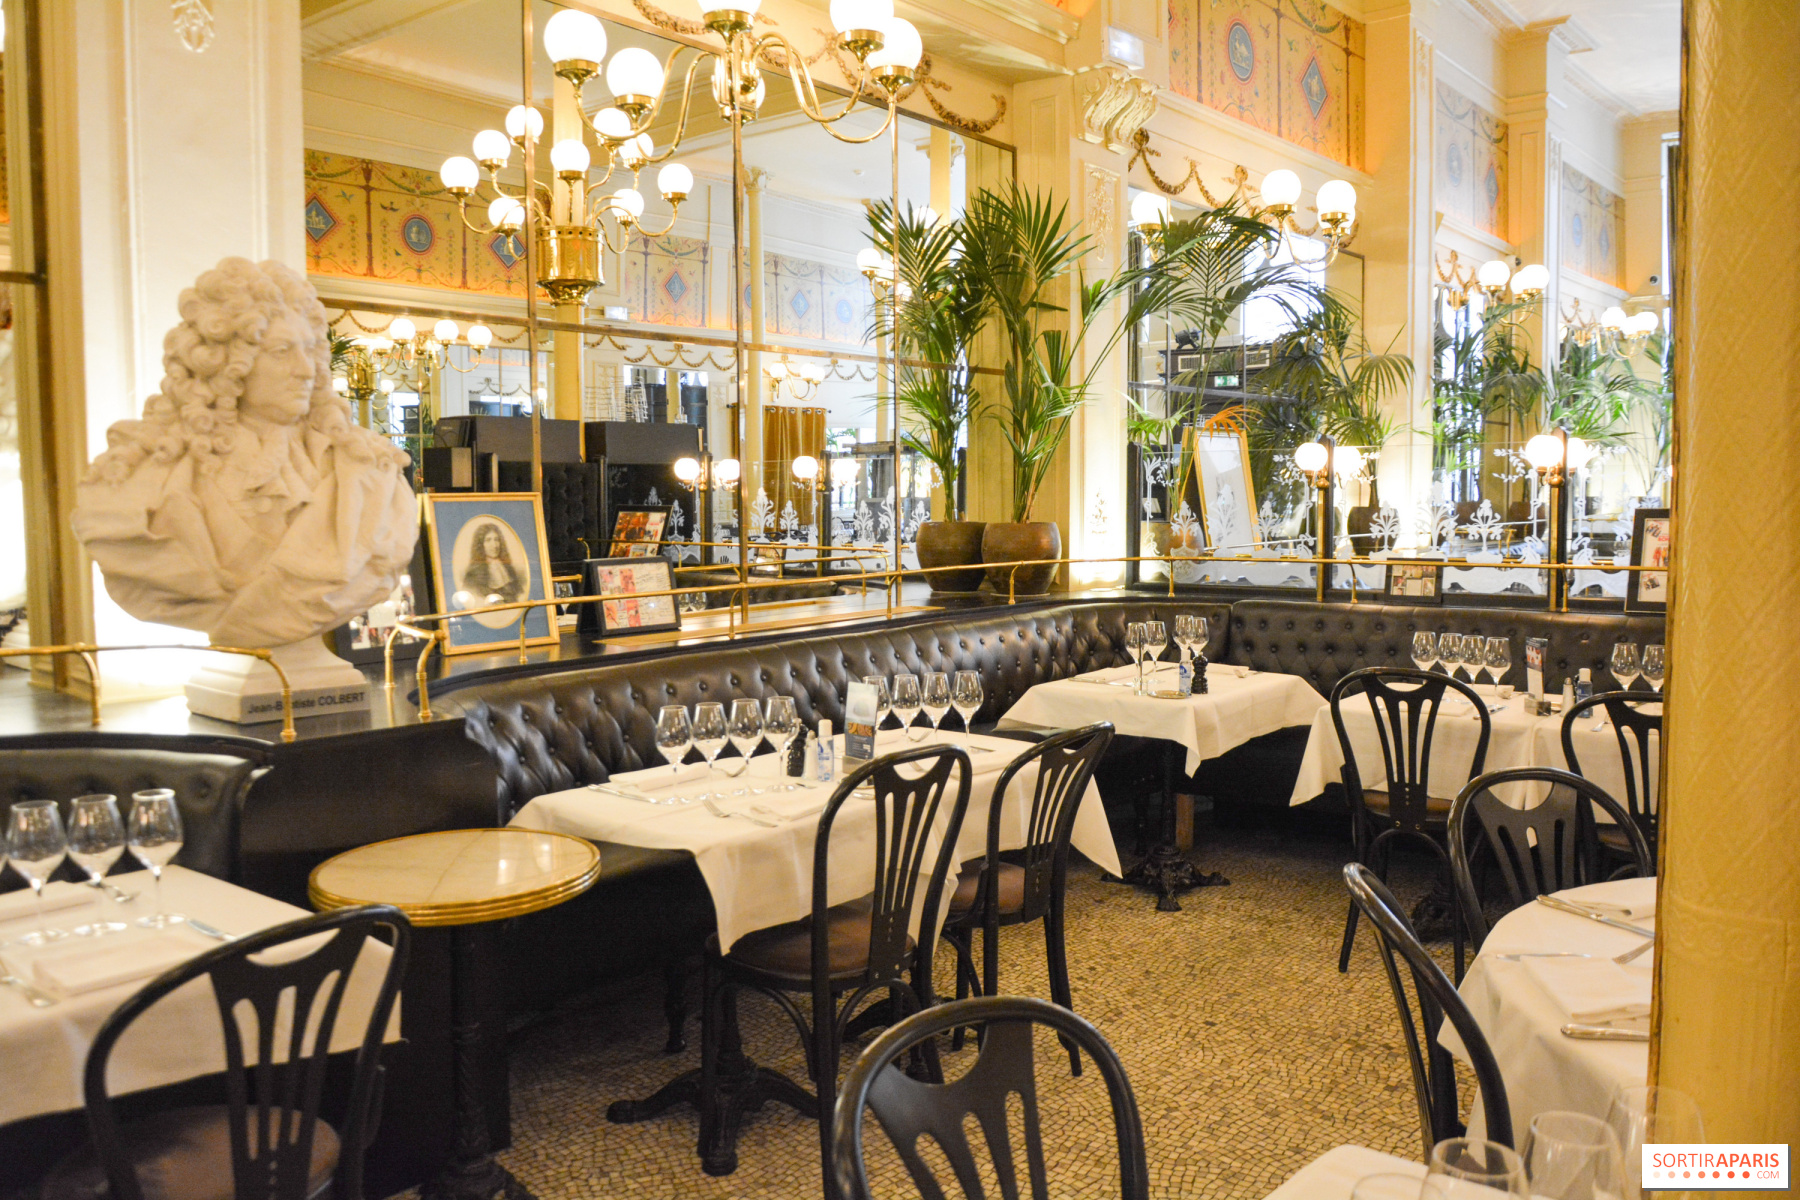 Palais Royal Restaurant in Paris - Restaurant Reviews, Menu and